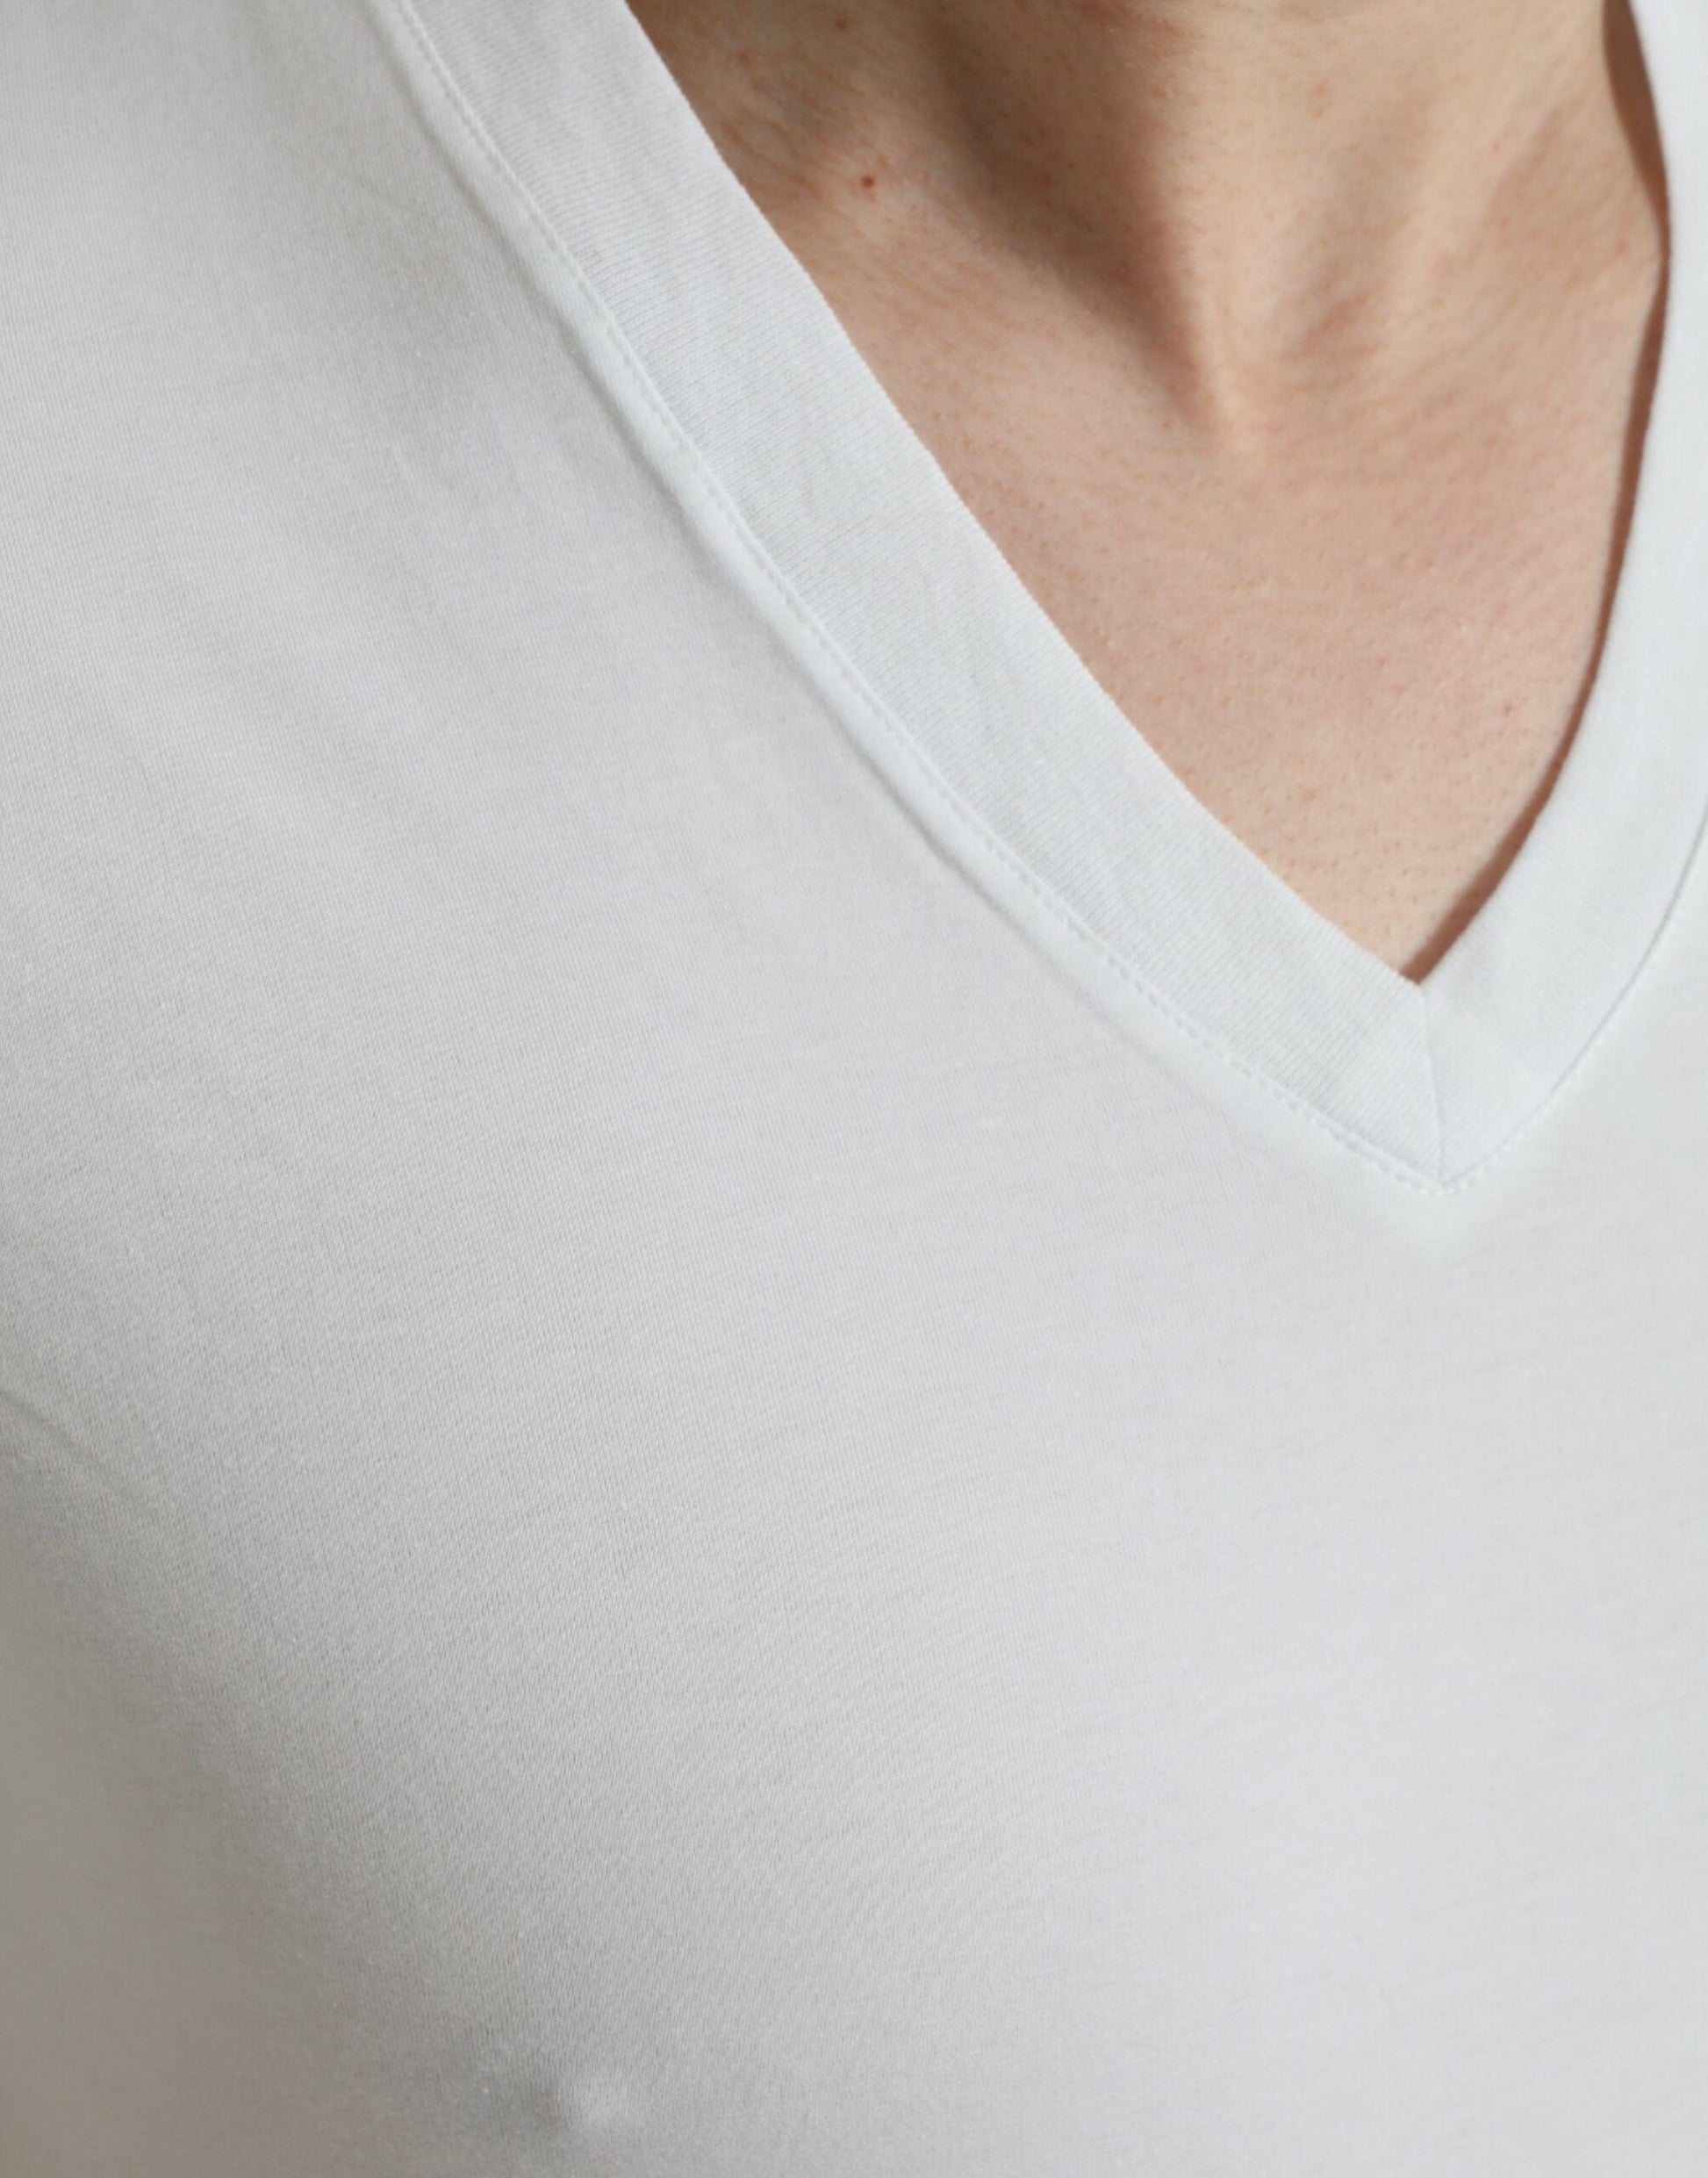 Dolce & Gabbana White Cotton V-neck Short Sleeve Underwear T-shirt | Fashionsarah.com